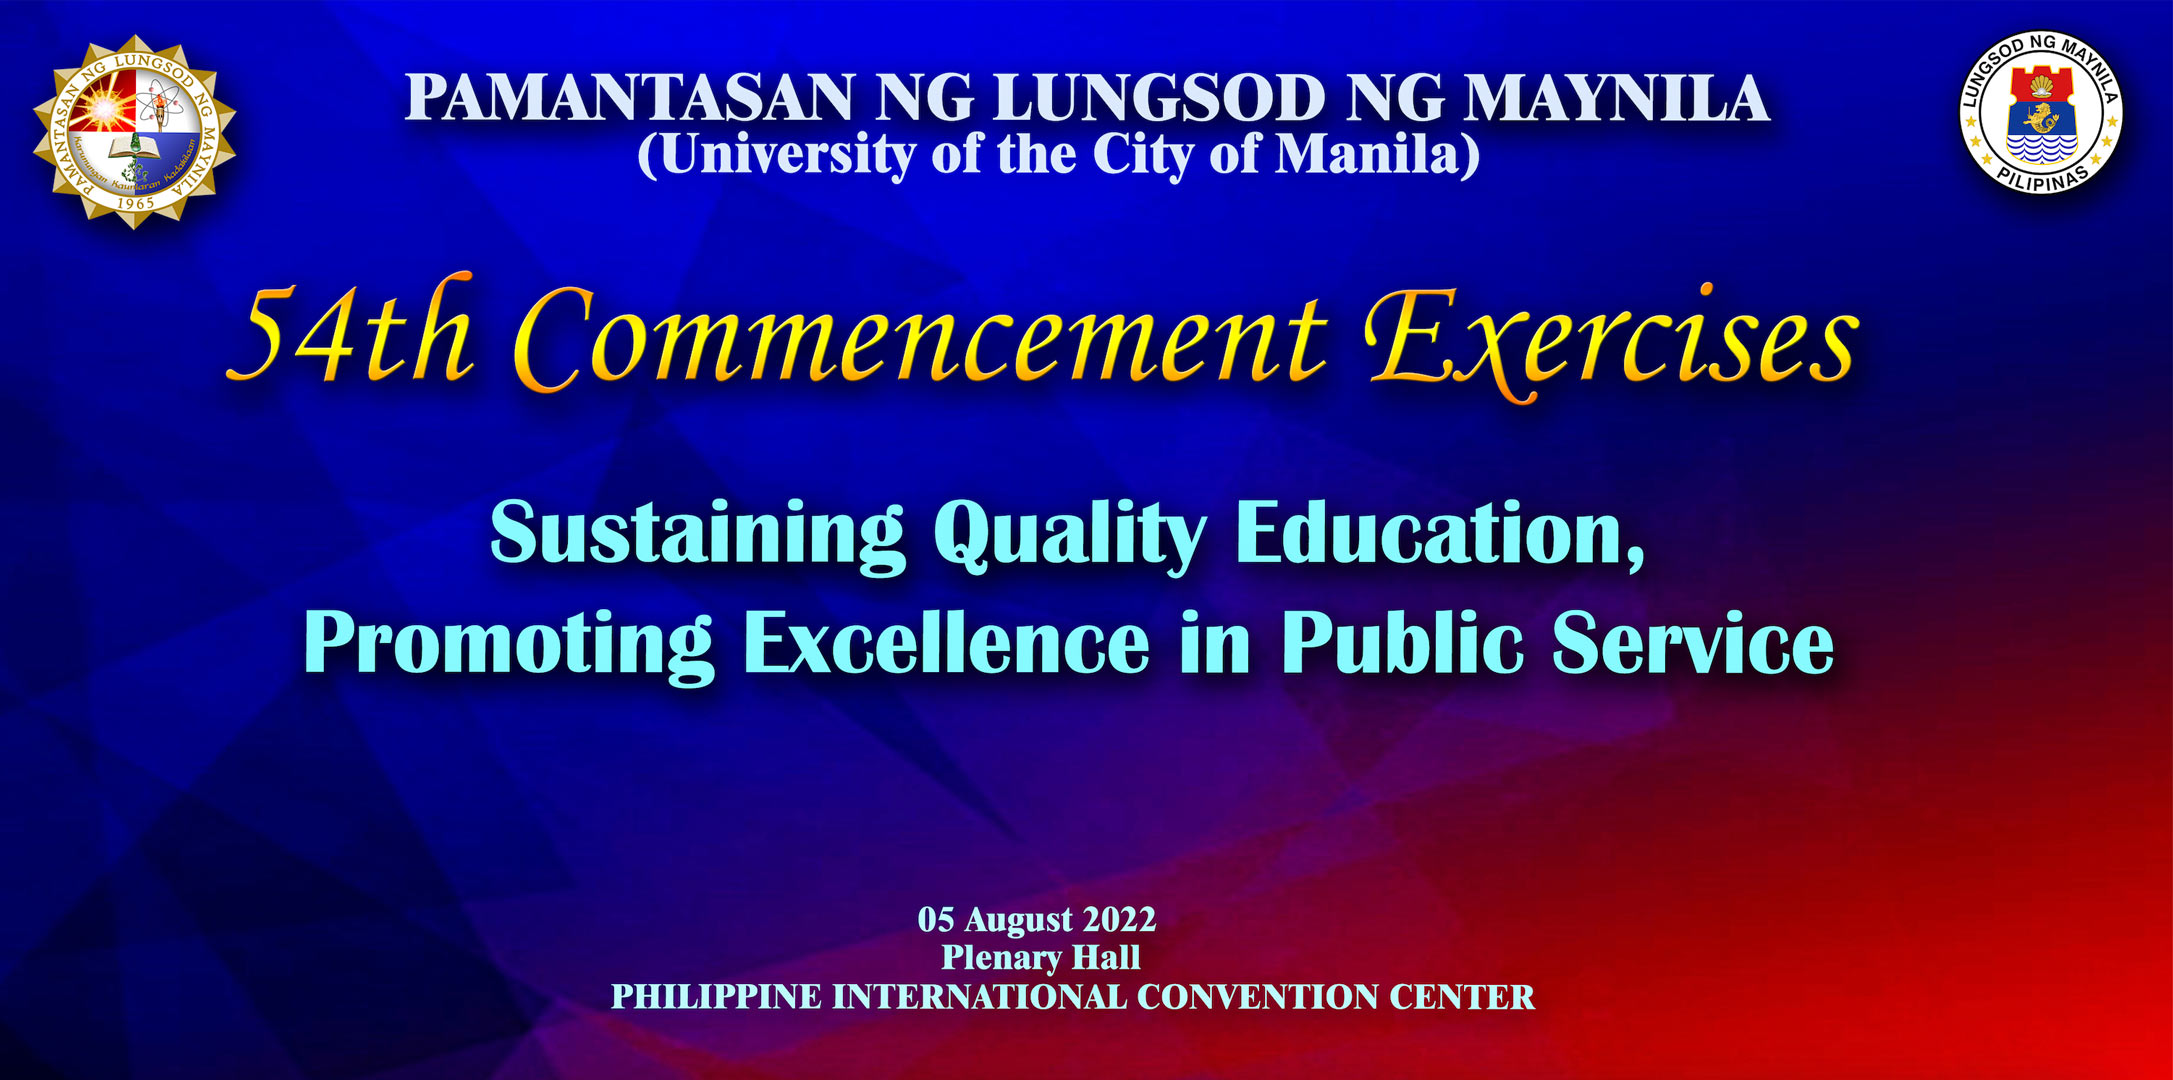 Watch: Pamantasan ng Lungsod ng Maynila's 54th Commencement Exercises (#PLMClassof2022)